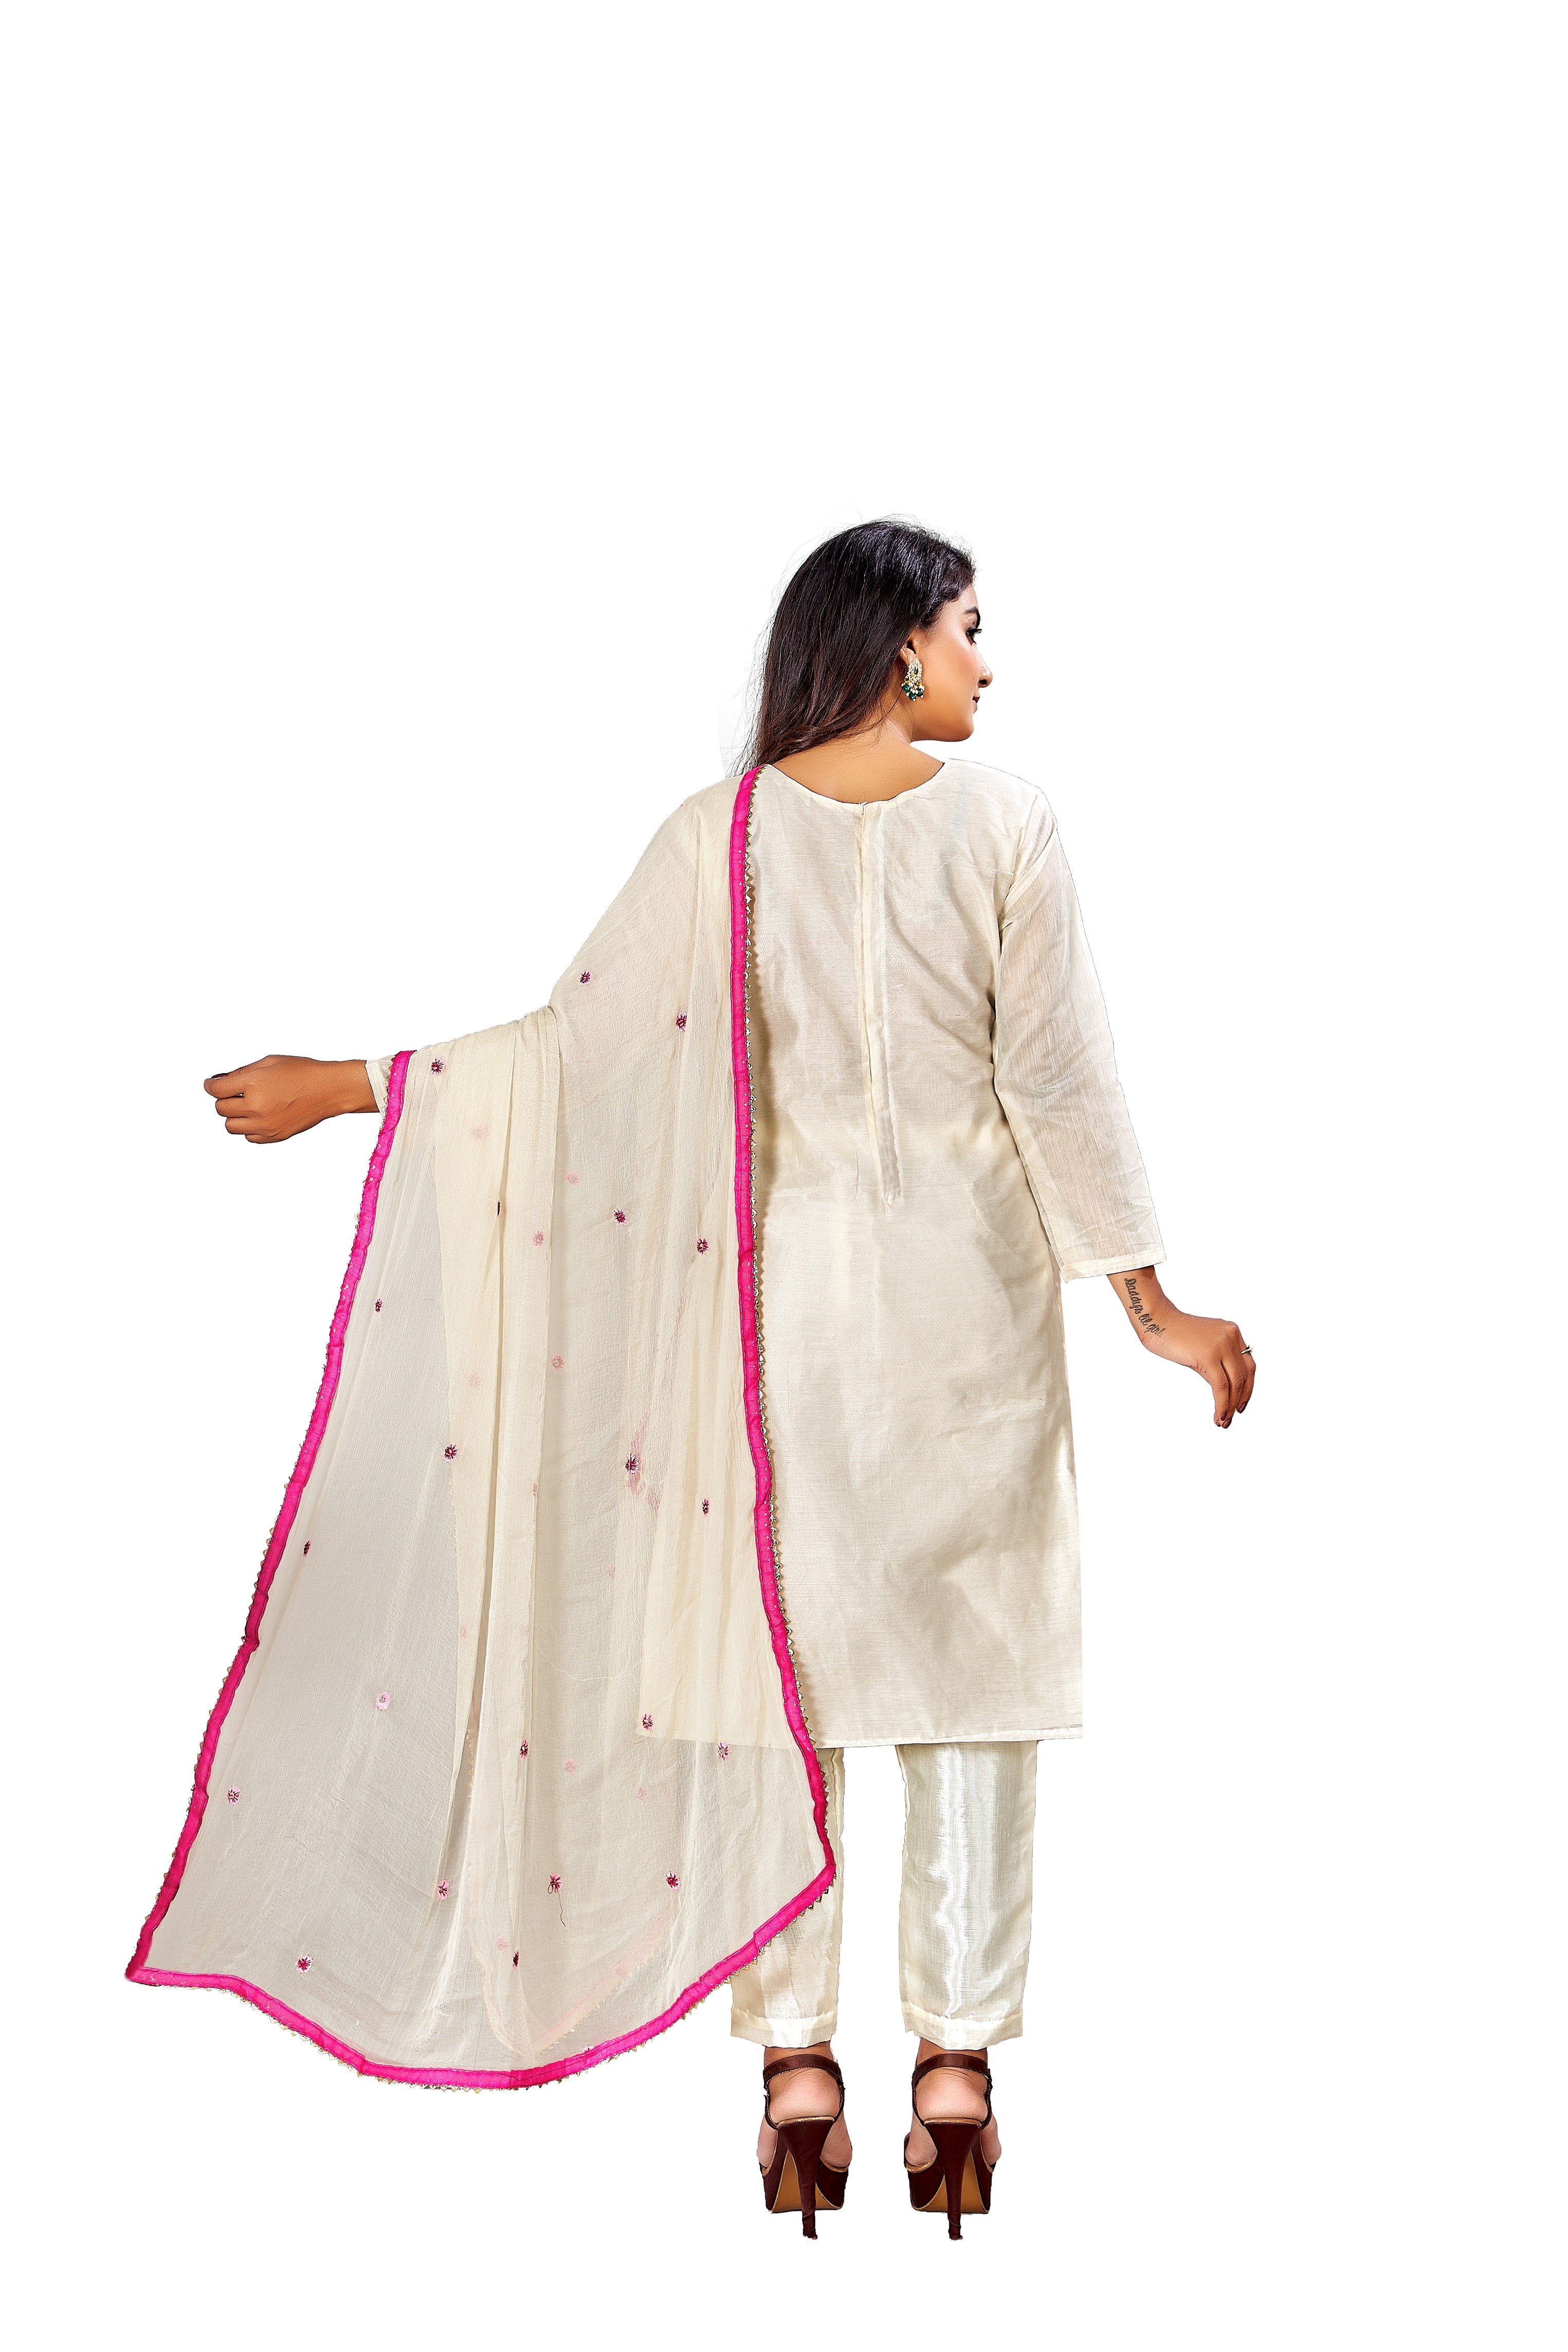 Women's Off White Colour Semi-Stitched Suit Sets - Dwija Fashion